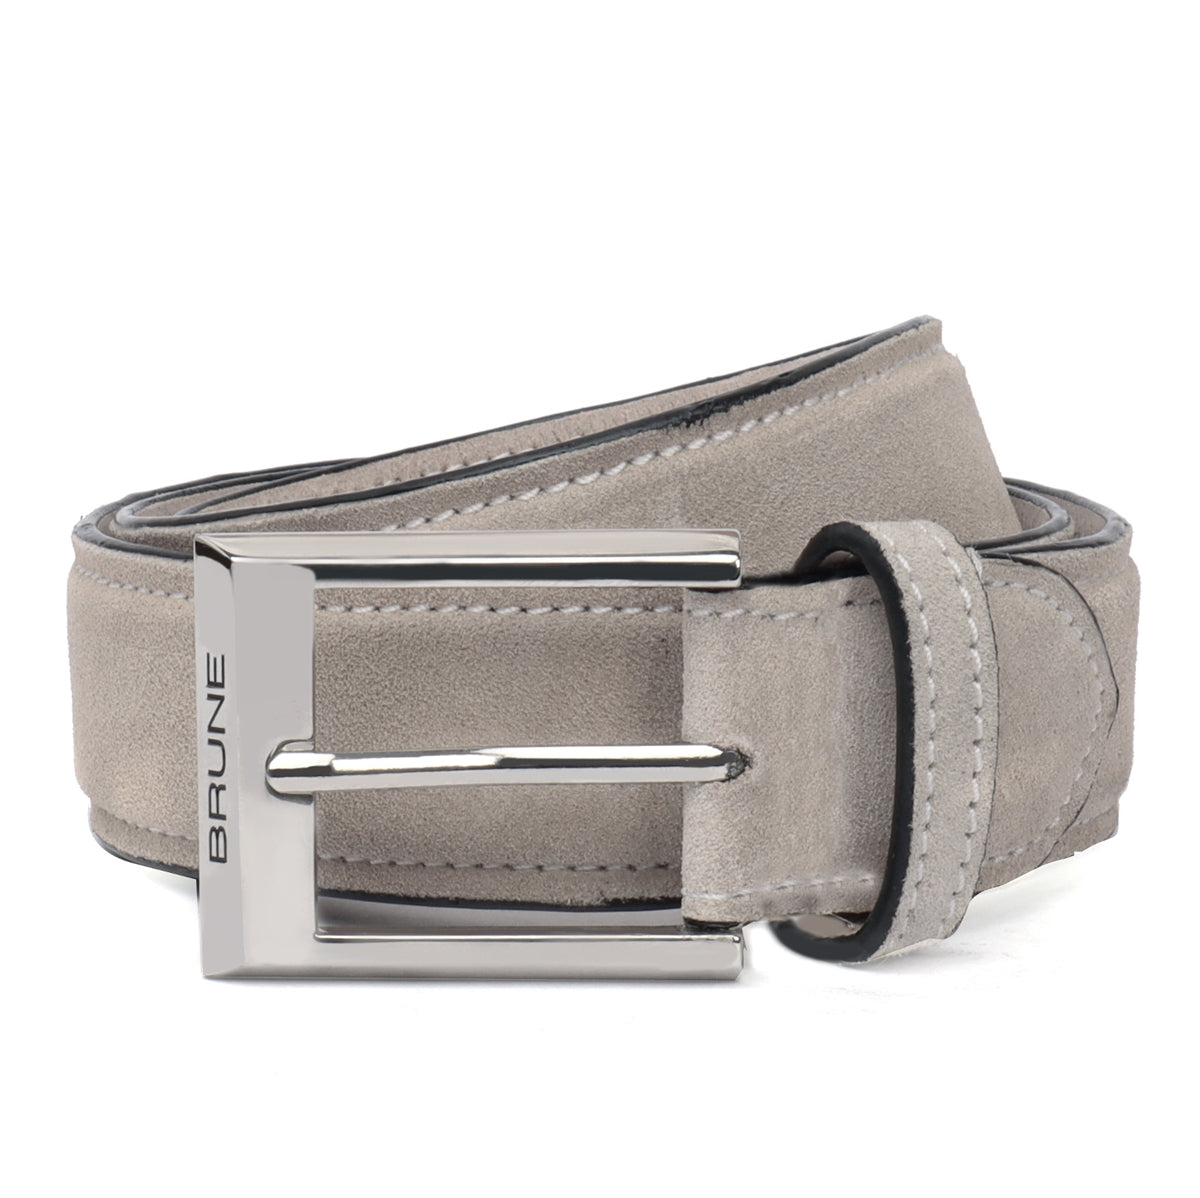 Men's Beige Suede Leather Belt With Silver Metal Buckle By Brune & Bareskin